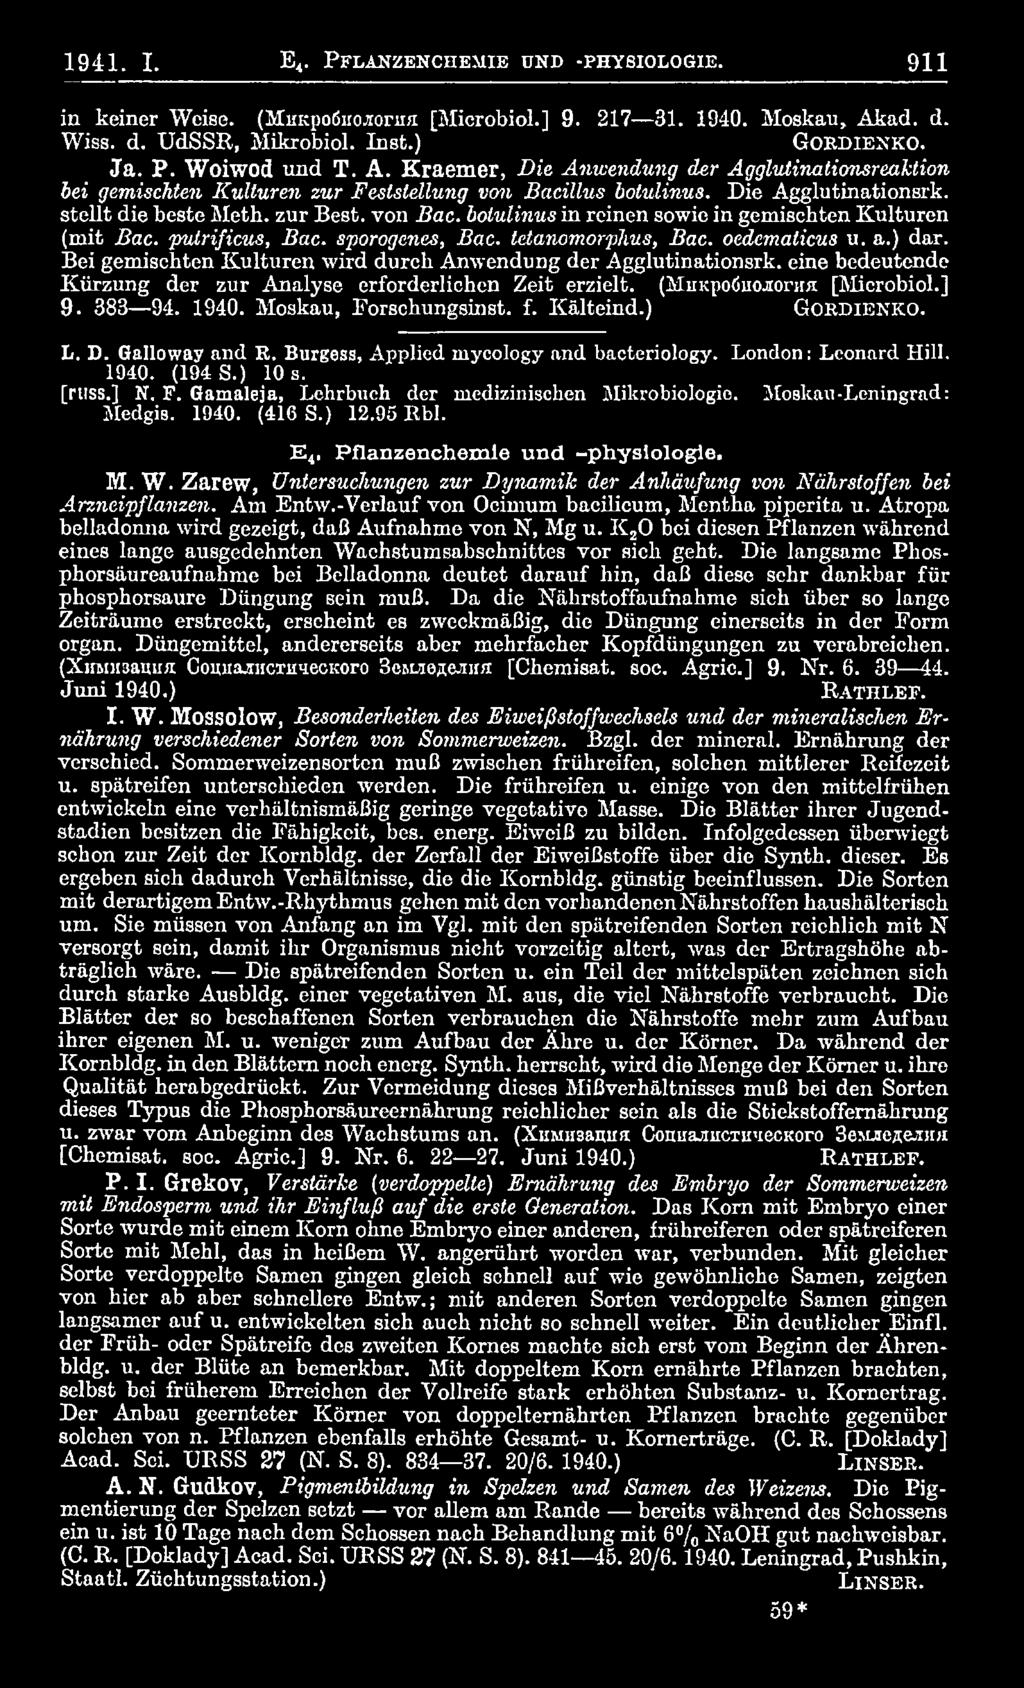 Moskau, Forschungsinst. f. Kälteind.) GORDIENKO. Xi. D. Galloway and E. Burgess, Applied mycology and bacteriology. London: Leonard Hill. 1040. (194 S.) 10 s. [russ.] N. F. Gamaleja, Lehrbuch der medizinischen Mikrobiologie.